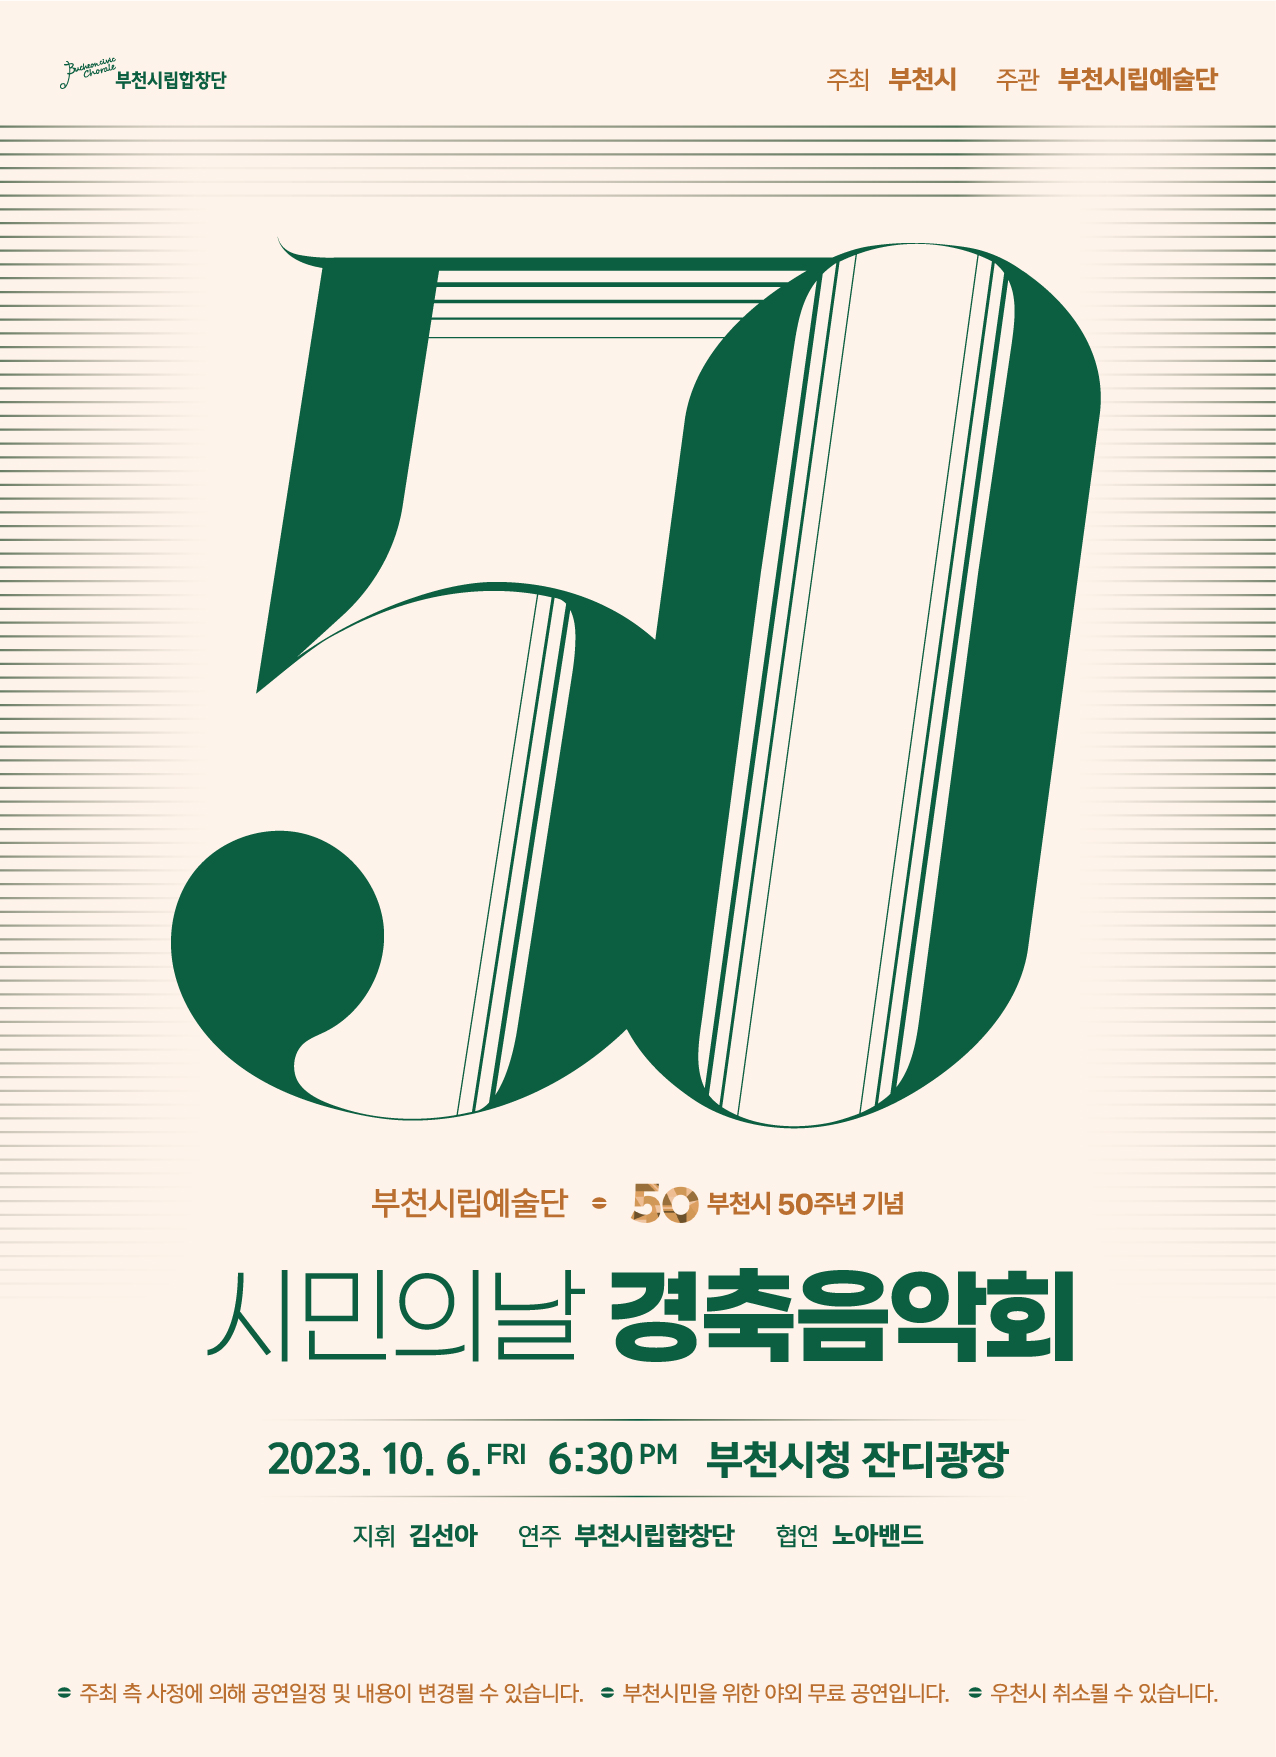 [10.6]Bucheon City Arts Group - Celebration Concert for Bucheon Citizen’s Day